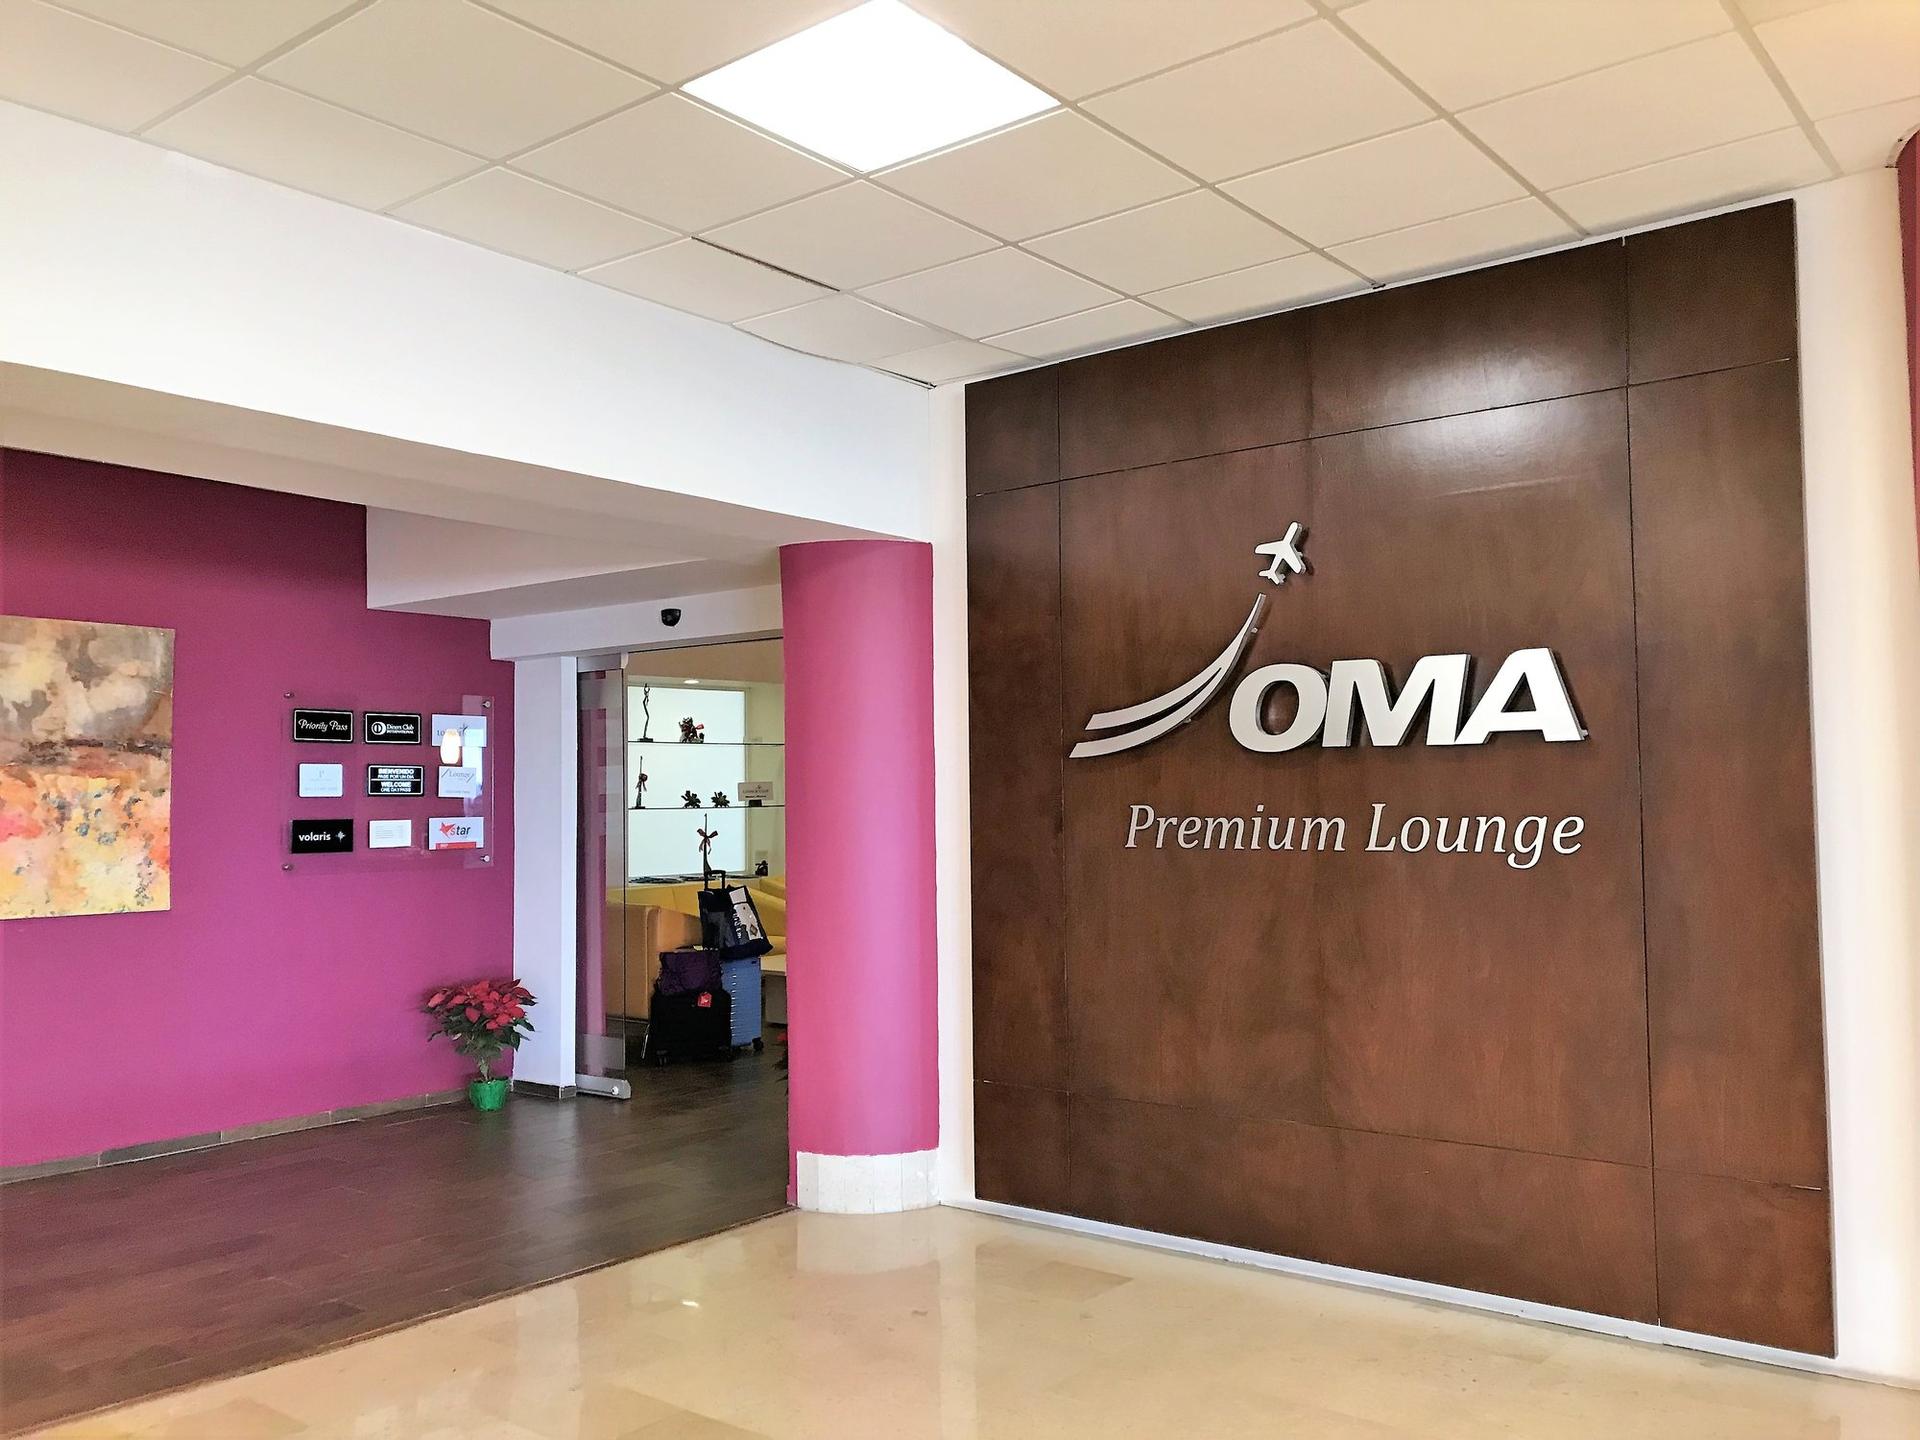 OMA Premium Lounge image 7 of 30